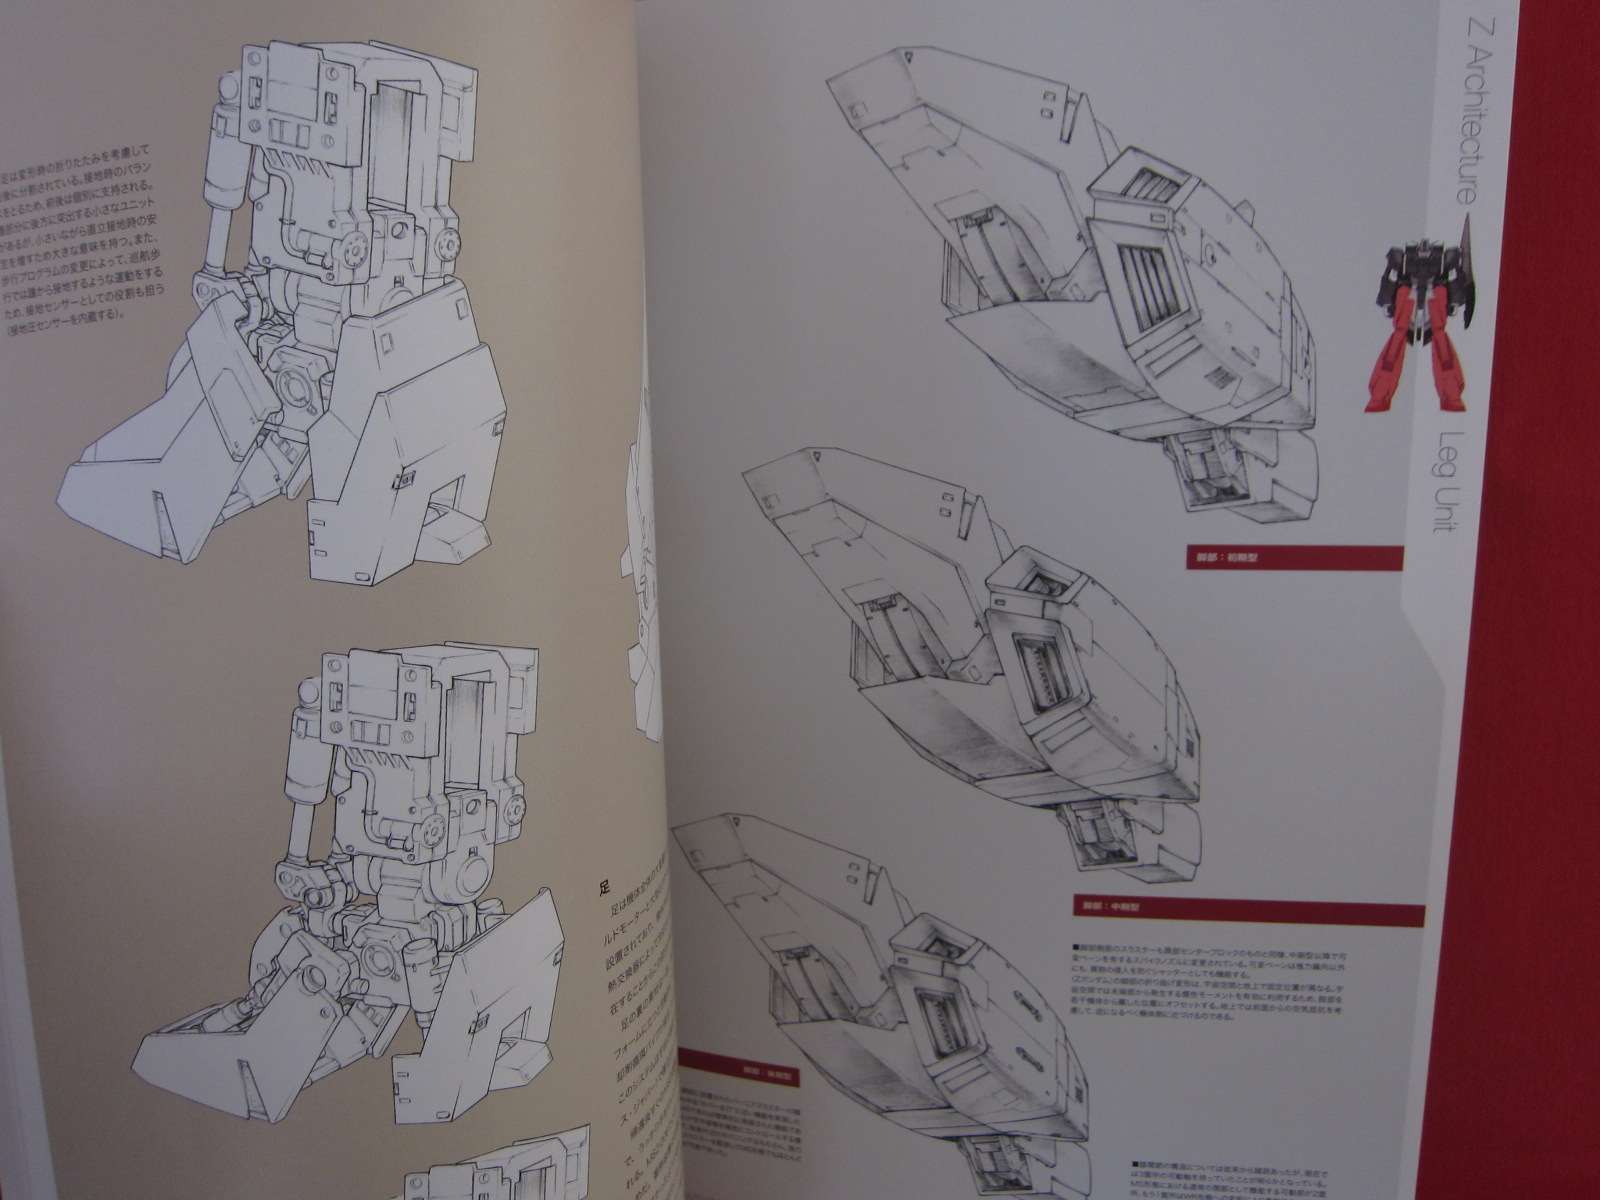 Master Archive Mobile Suit MSZ-006 Z Gundam art book